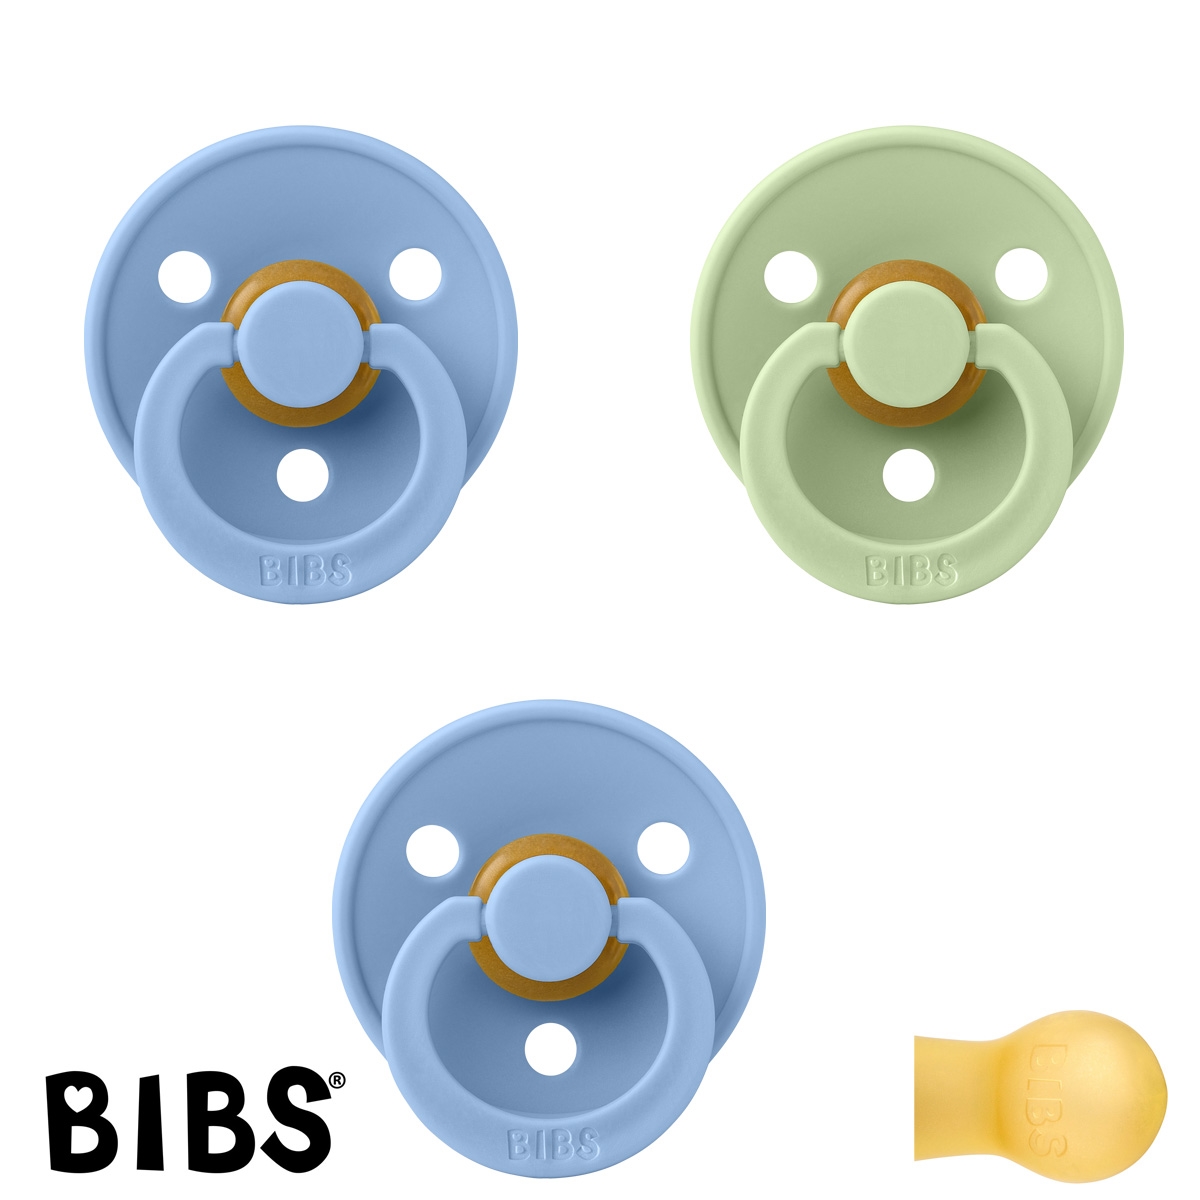 BIBS Colour Schnuller mit Namen, Gr. 2, 1 Pistachio, 2 Sky Blue, Rund Latex, (3er Pack)